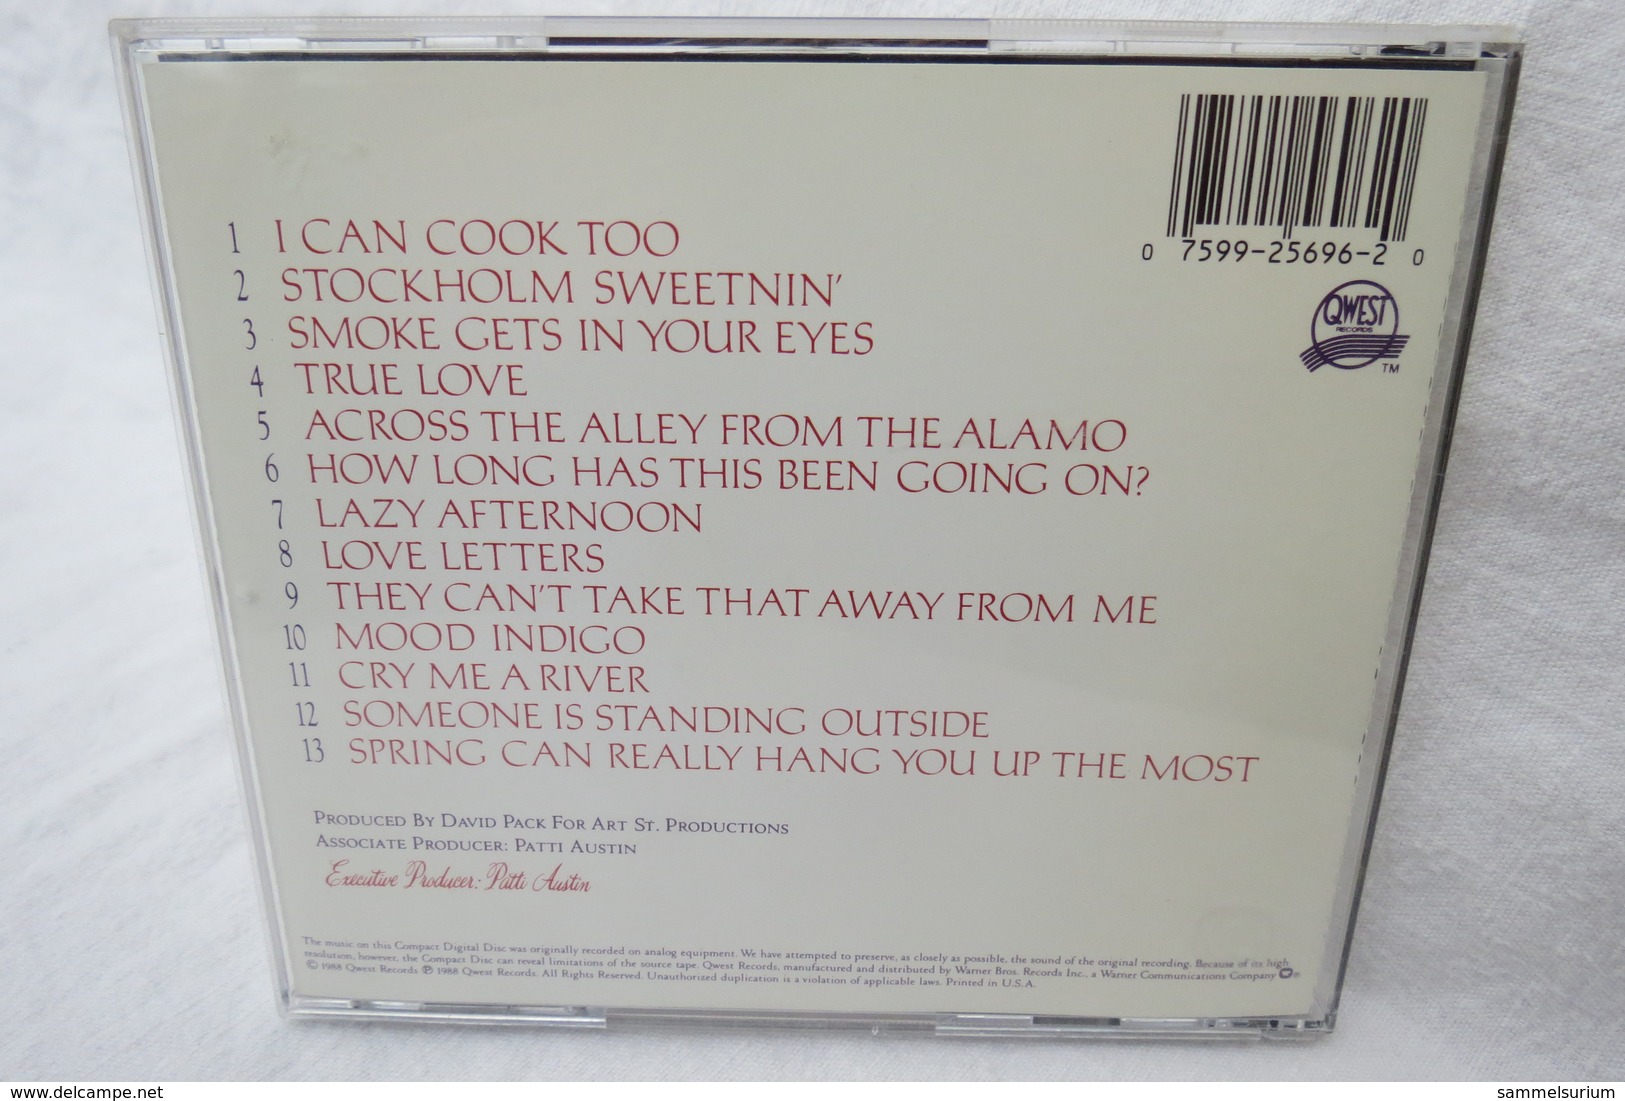 CD "Patti Austin" The Real Me - Soul - R&B